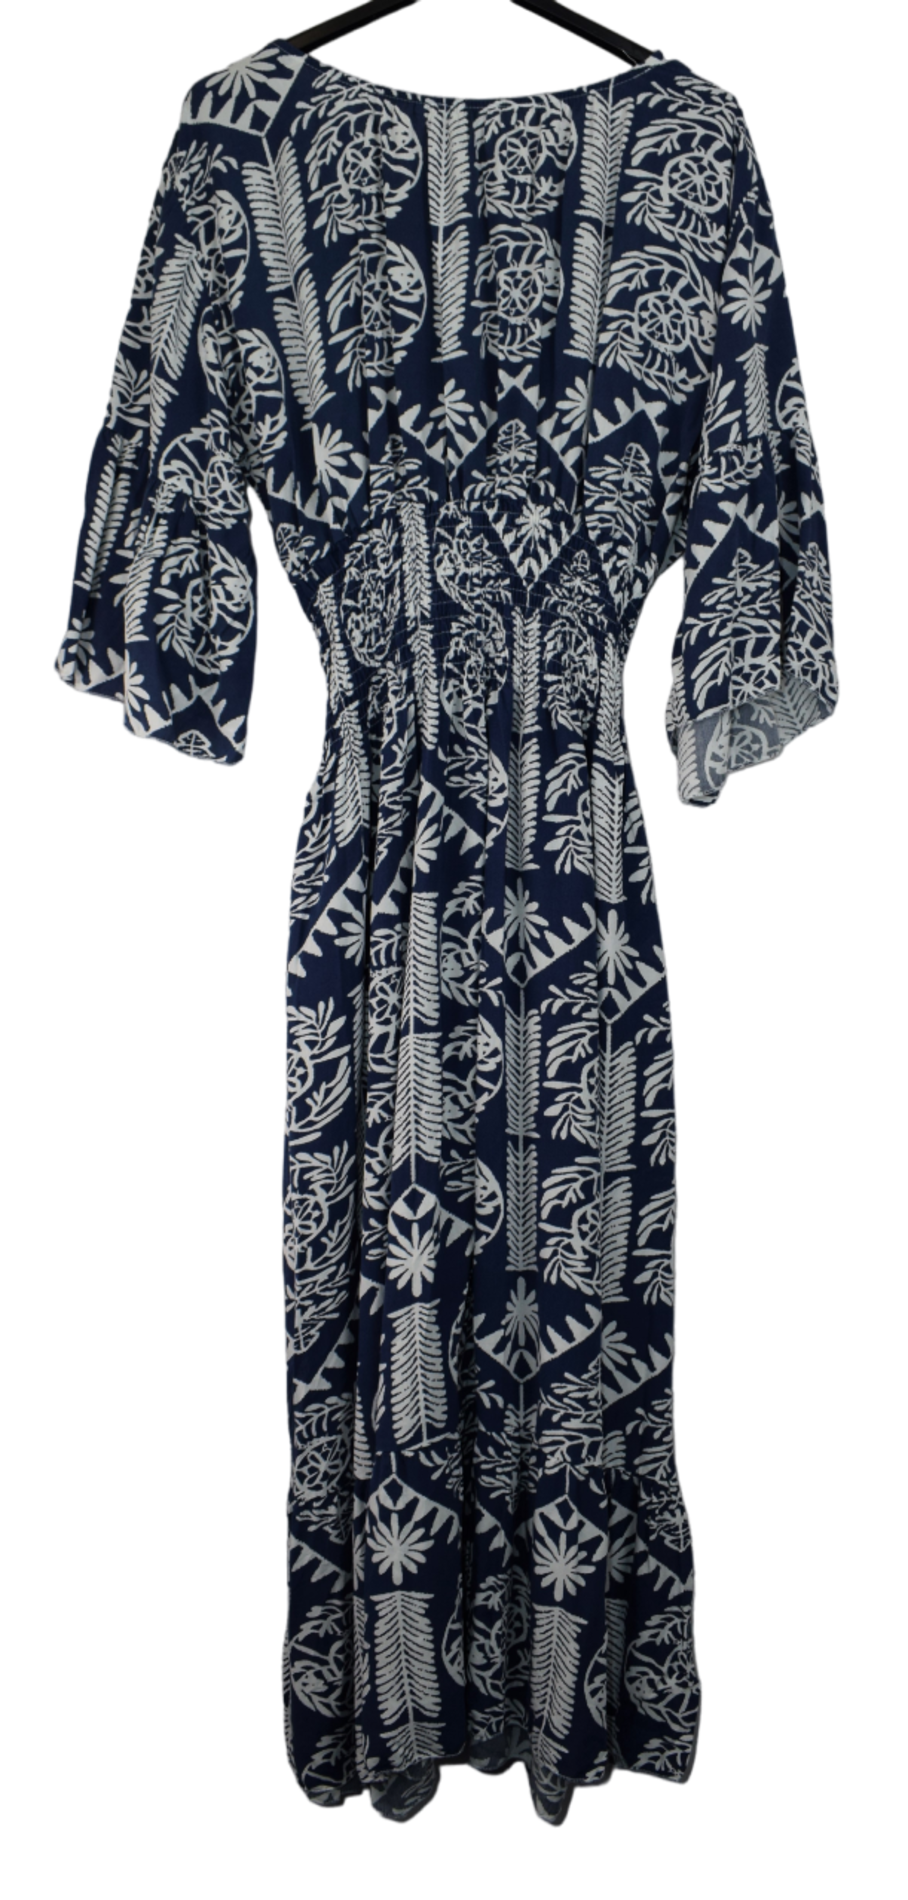 Ladies Italian Lagenlook Quirky Print Flare Sleeve Summer Maxi Dress